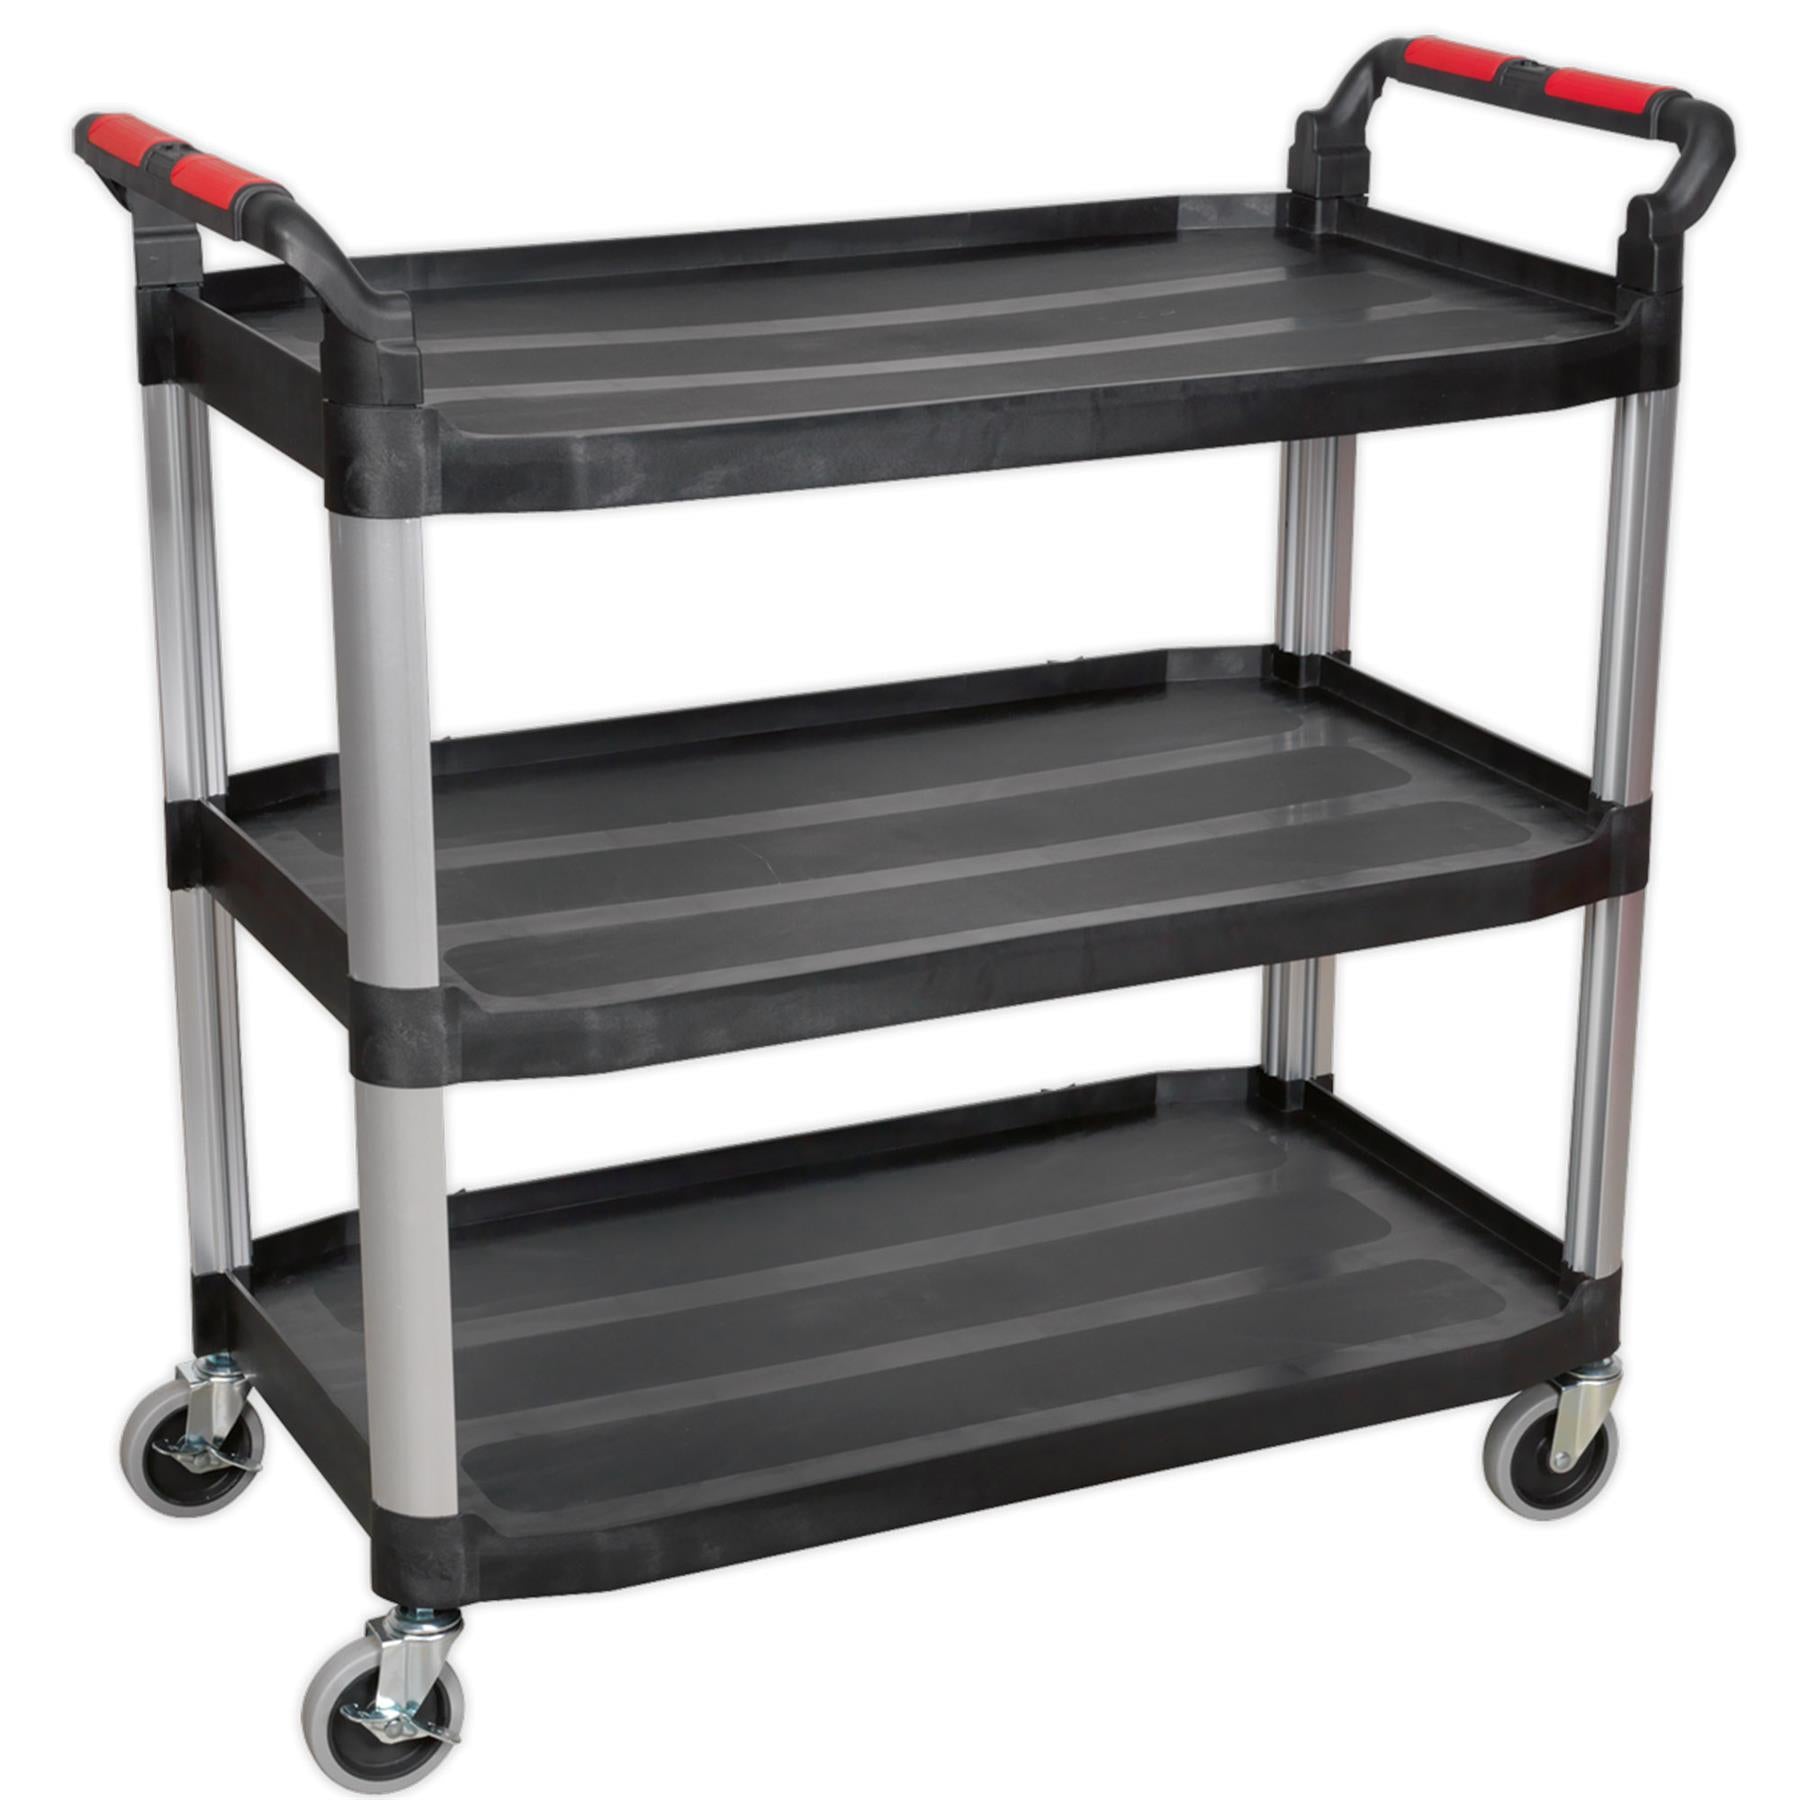 Sealey Workshop Trolley 3-Level Composite  40kg capacity per shelf